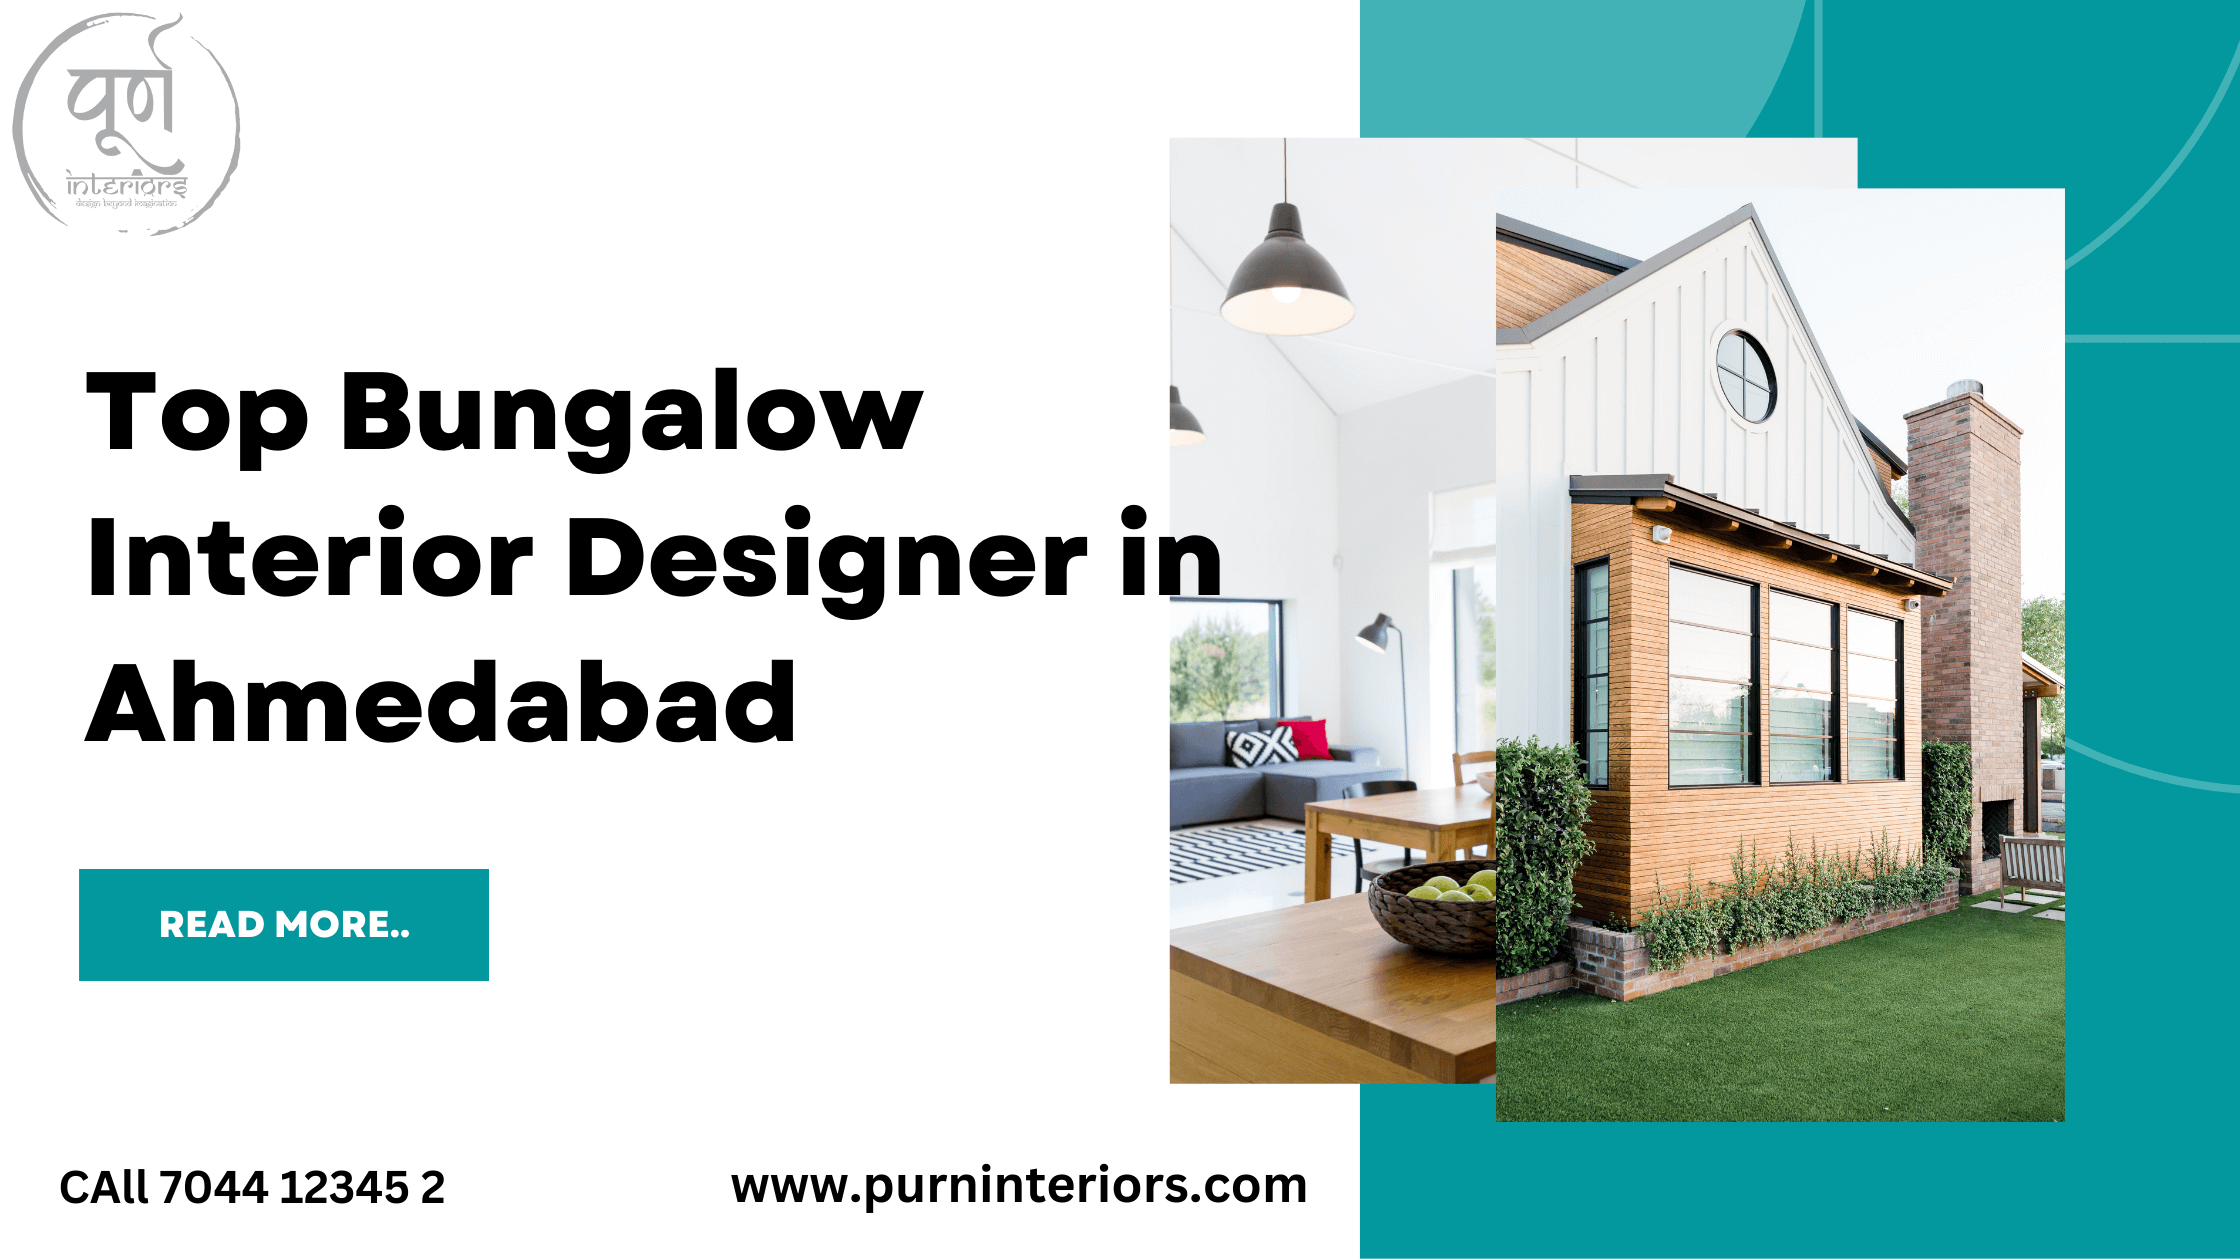 Top Bungalow Interior Designer In Ahmedabad